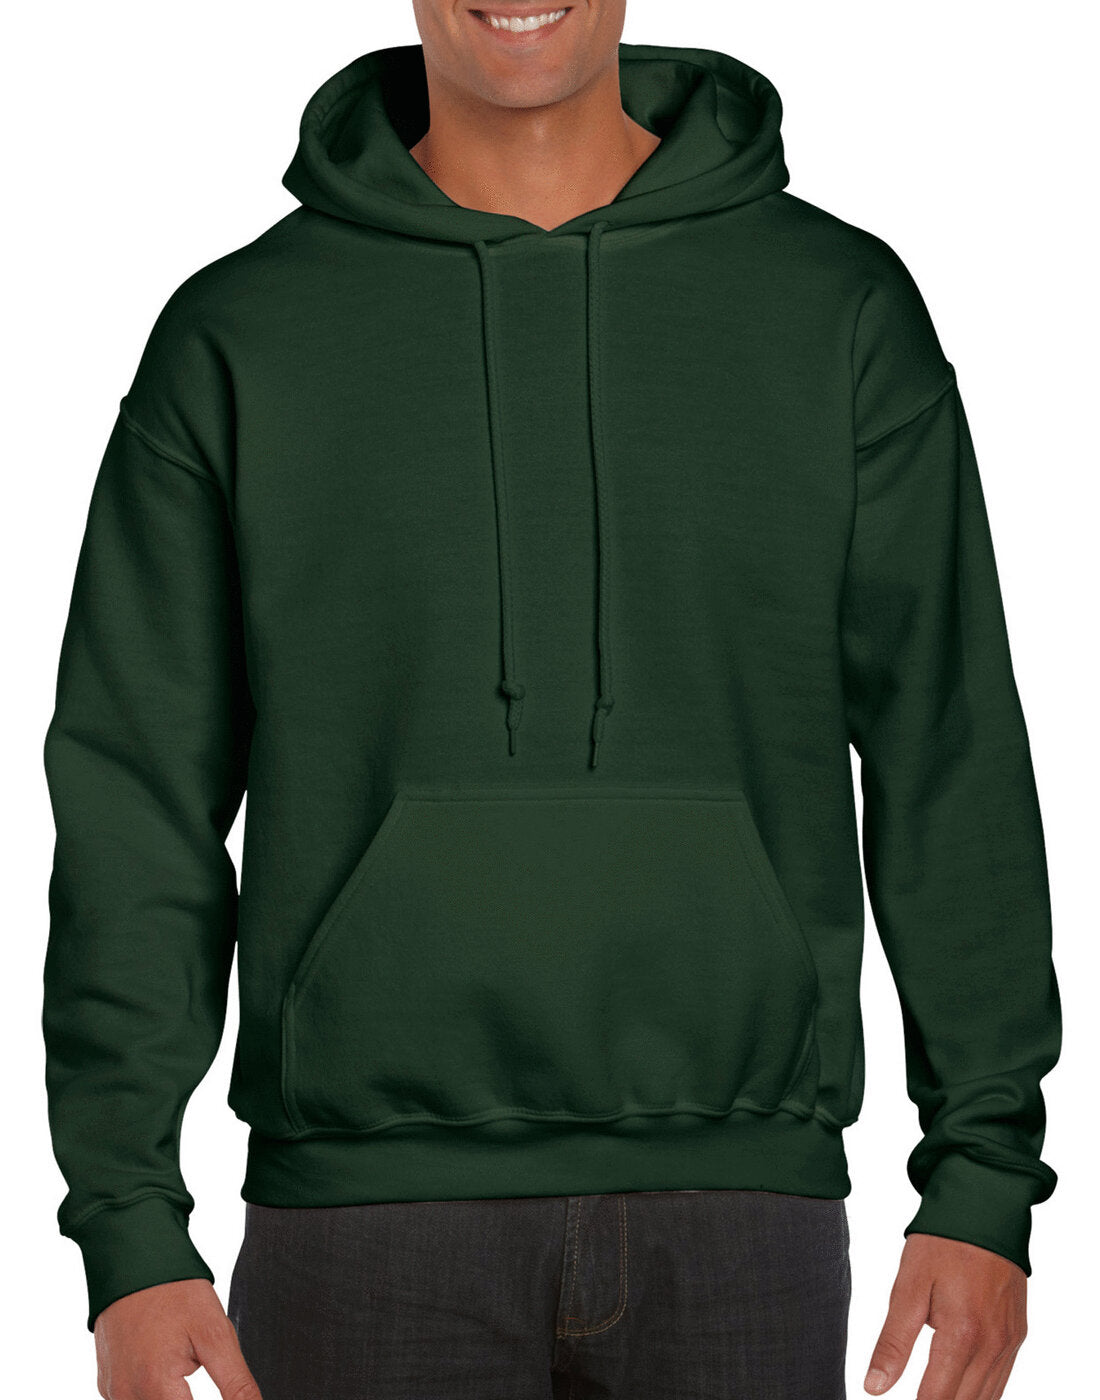 Gildan Dryblend Adult Hooded Sweatshirt - Forrest Green